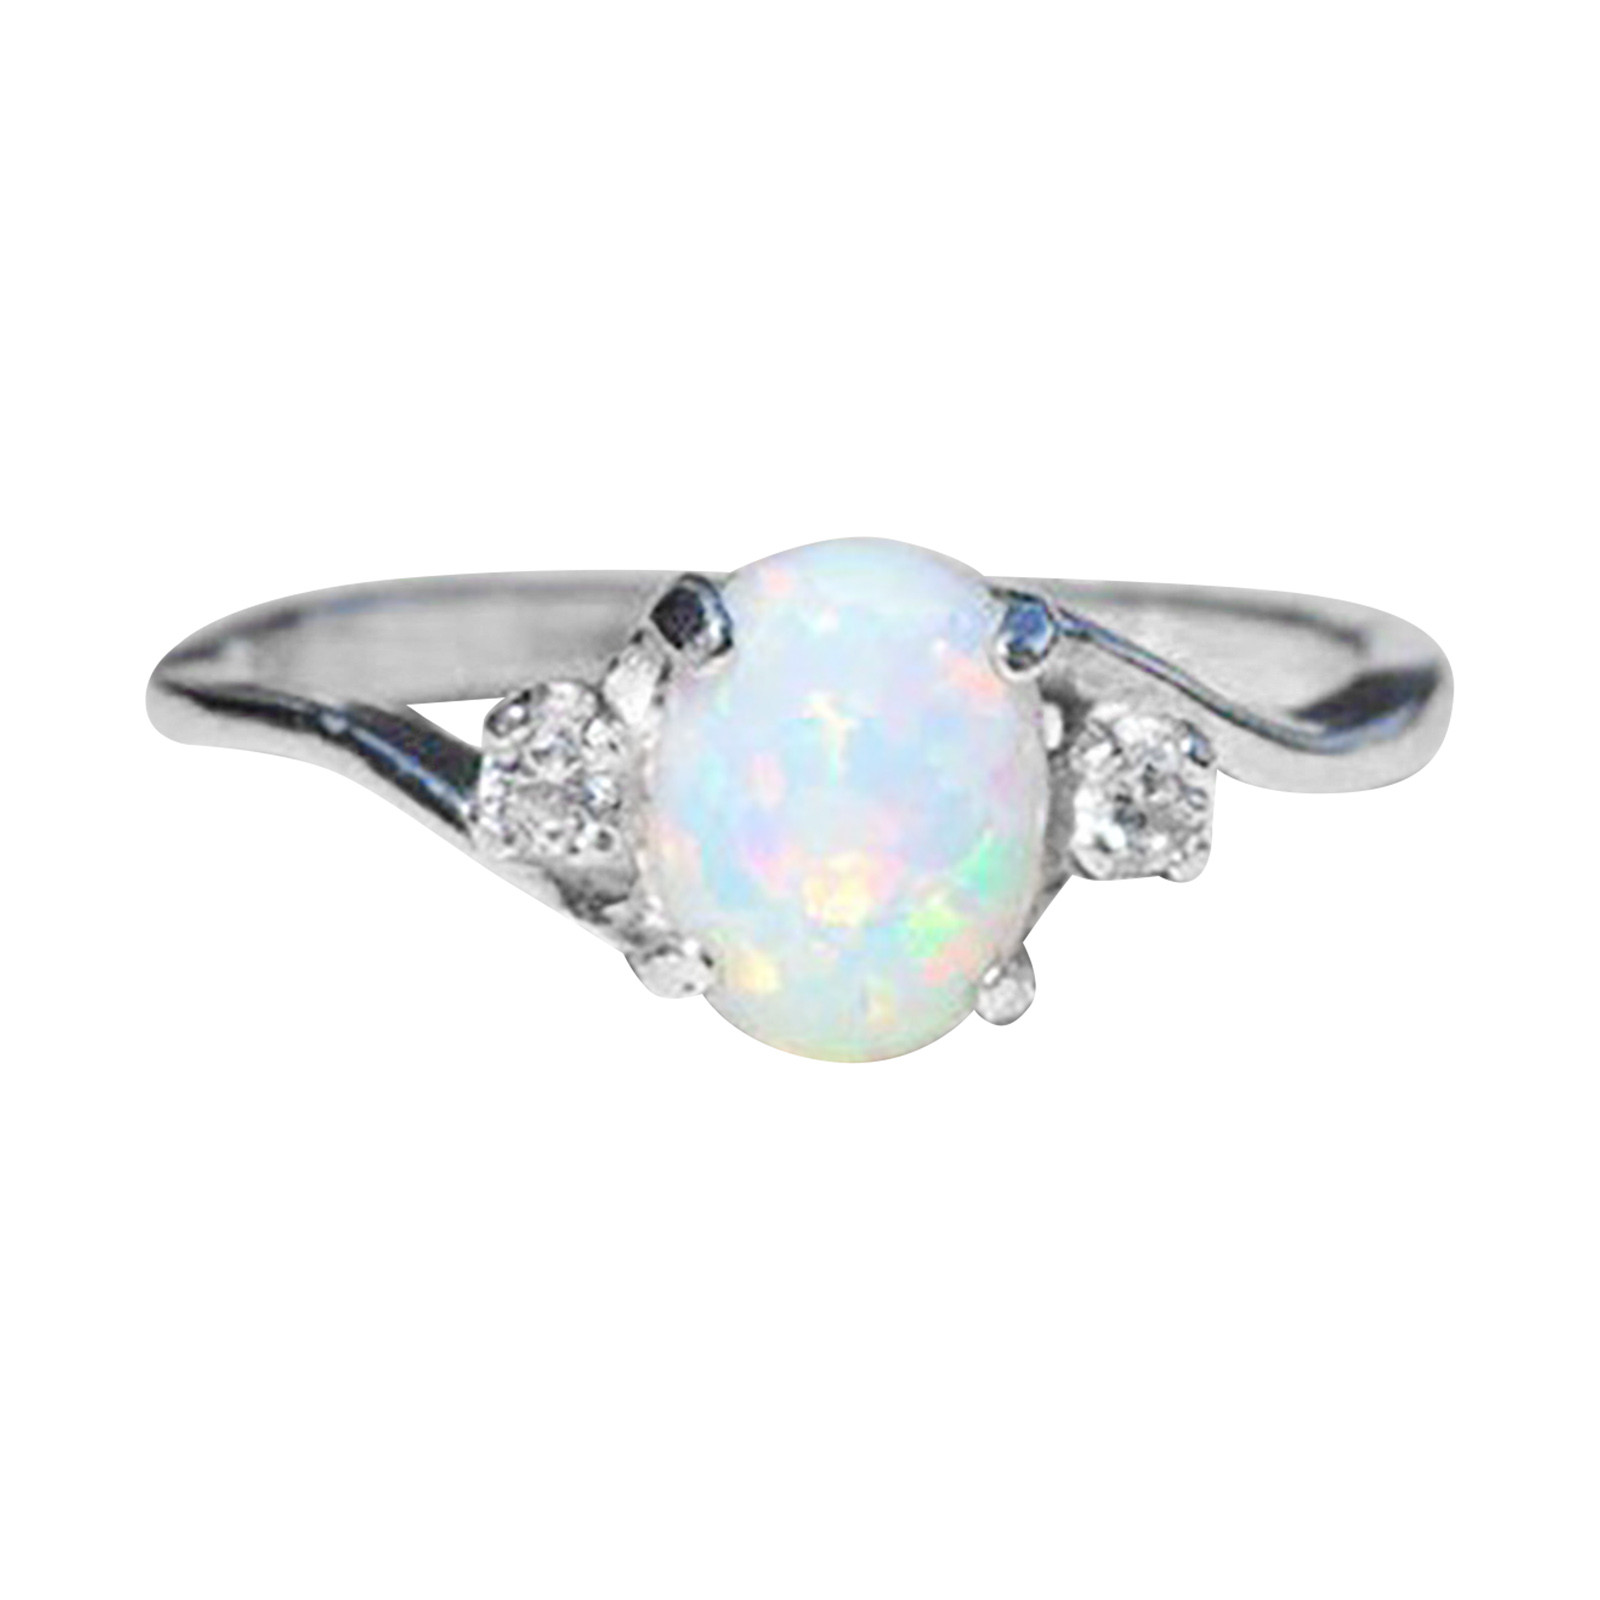 Fine Ladies Silver Ring Oval Cut Rhinestone Jewelry Birthday Proposal ...